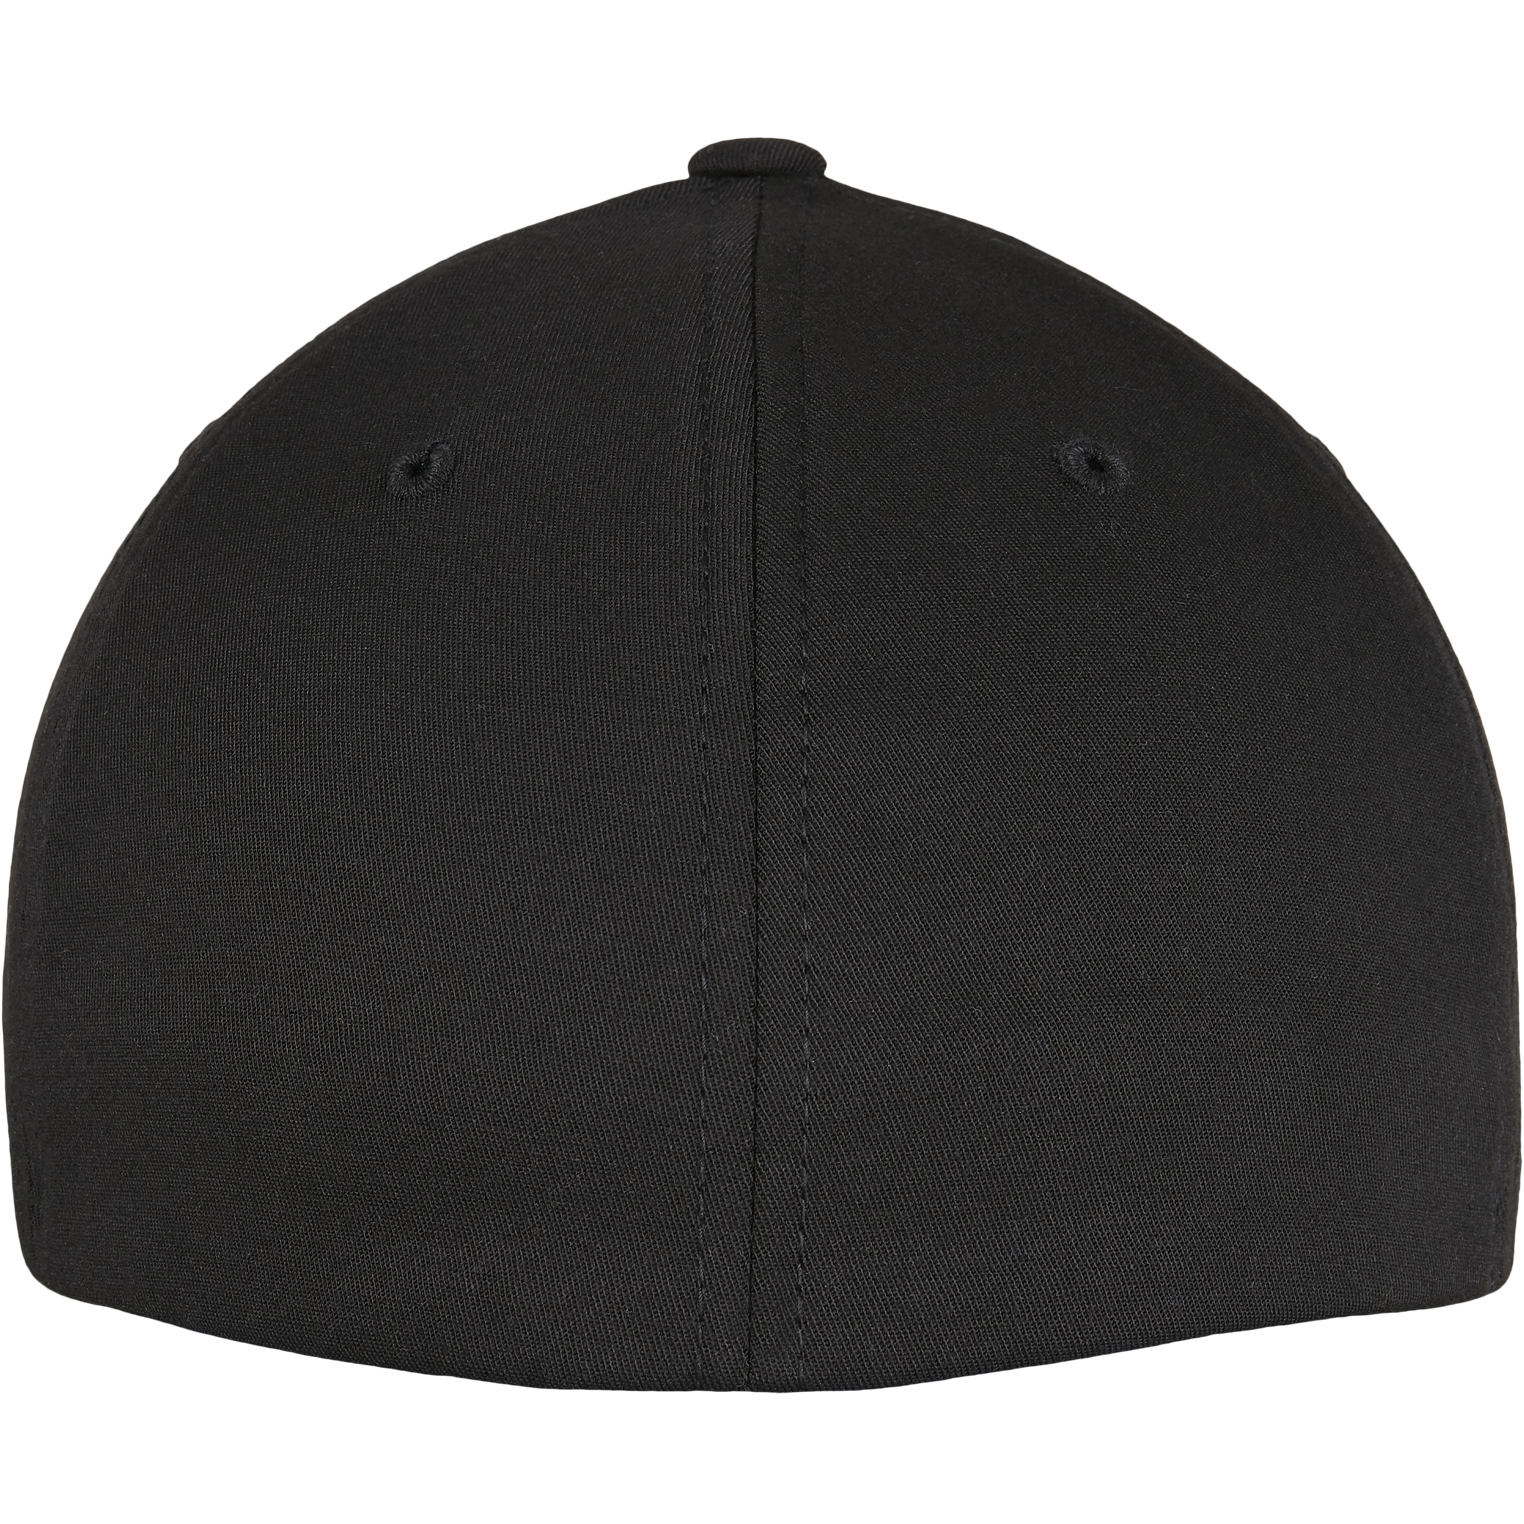 Plain Black Cap